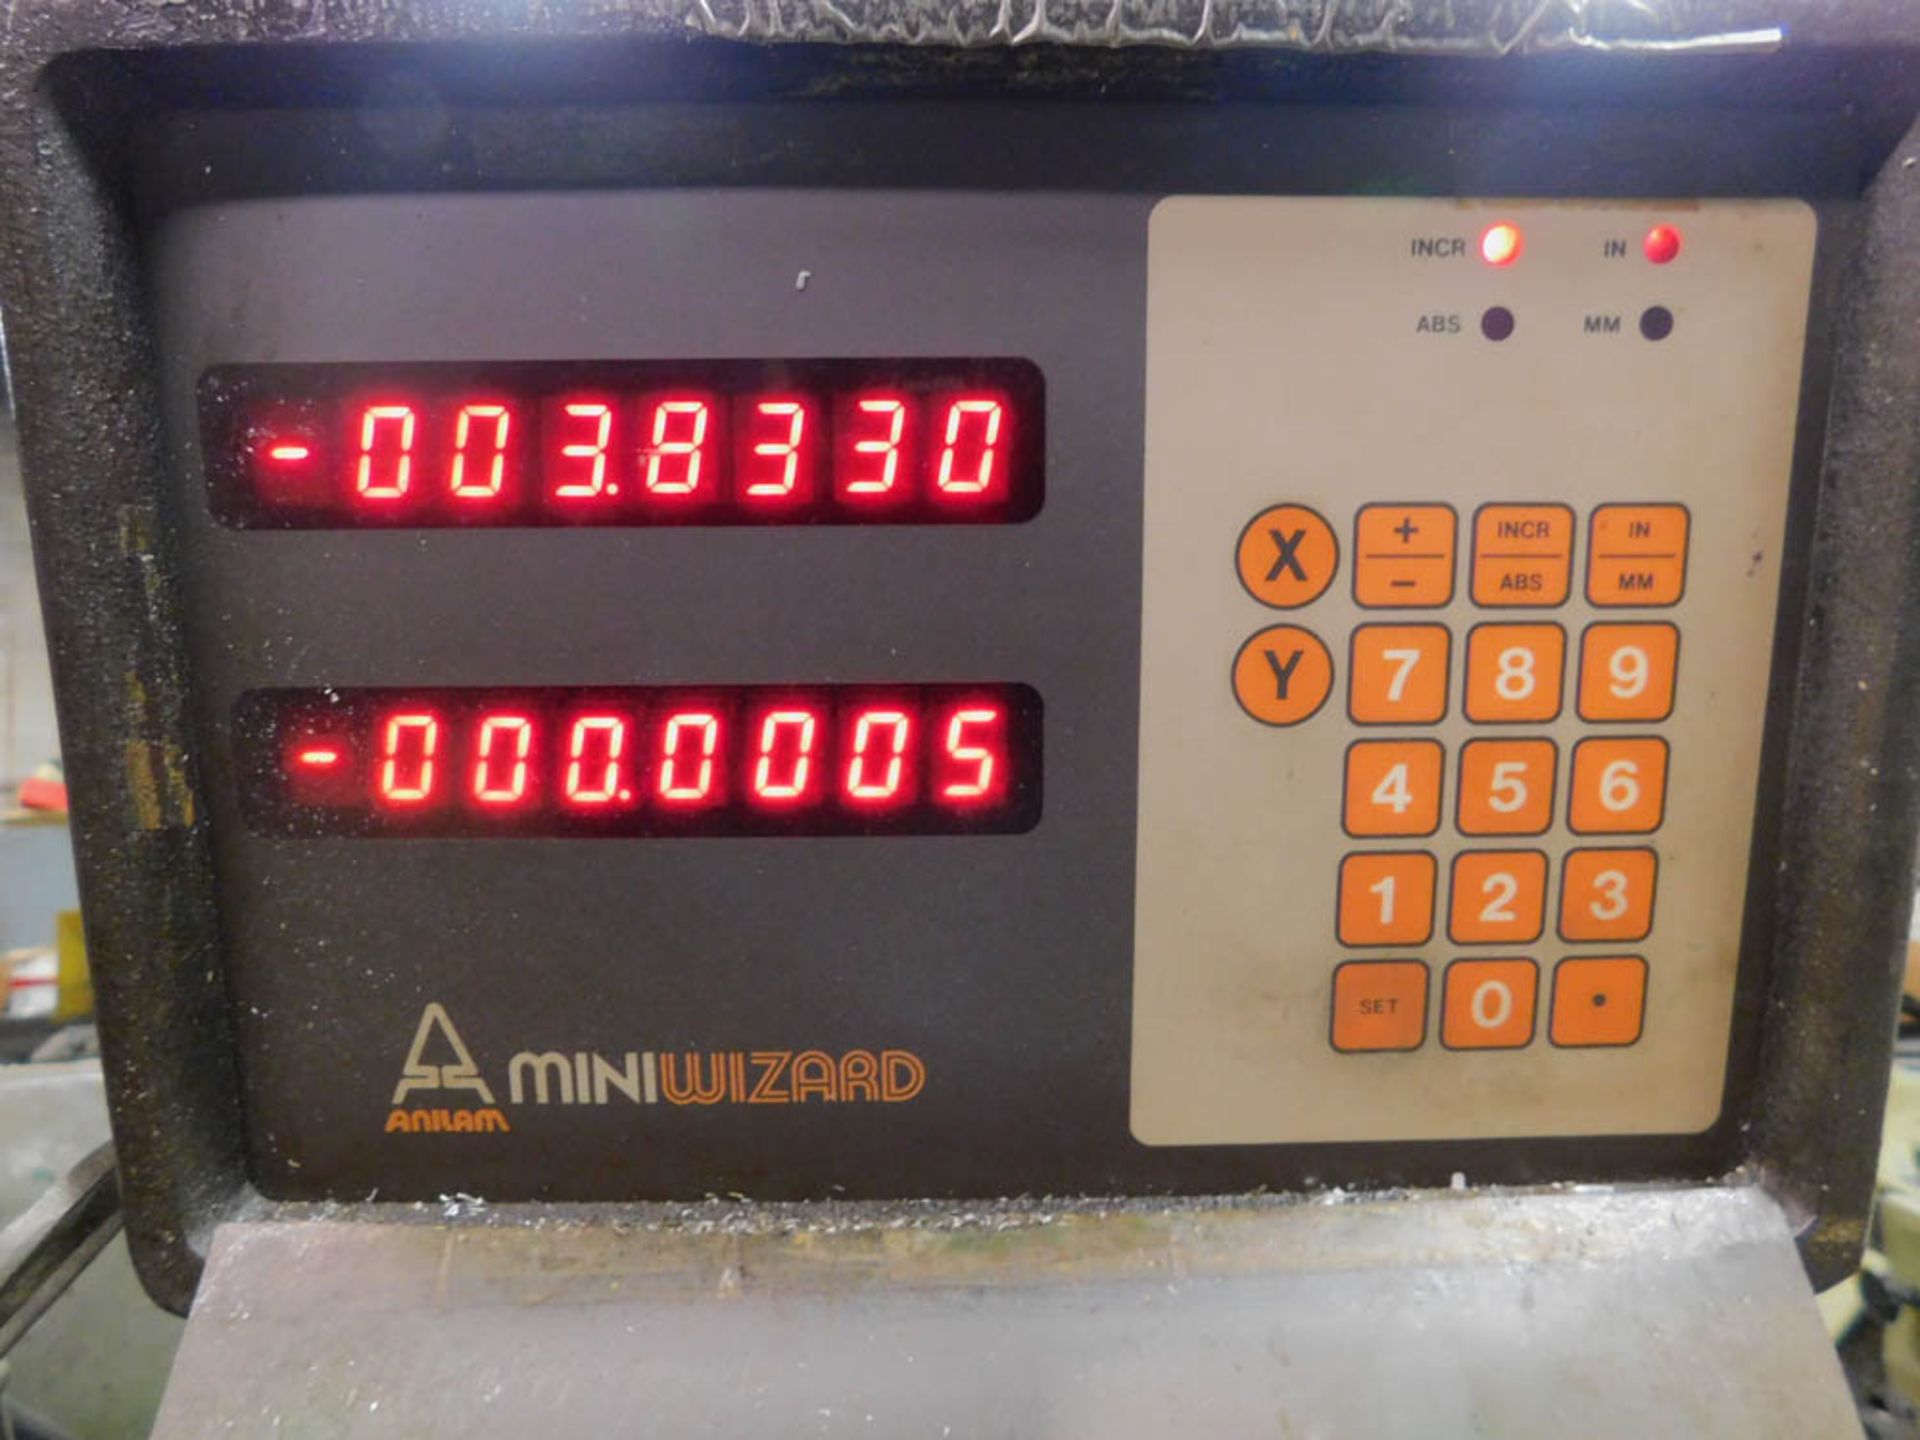 SUPERMAX KNEE TYPE VERTICAL MILLING MACHINE, 60-4200RPM, 2HP MOTOR, 9" X 49" SERVO POWER FEED TABLE, - Image 2 of 4